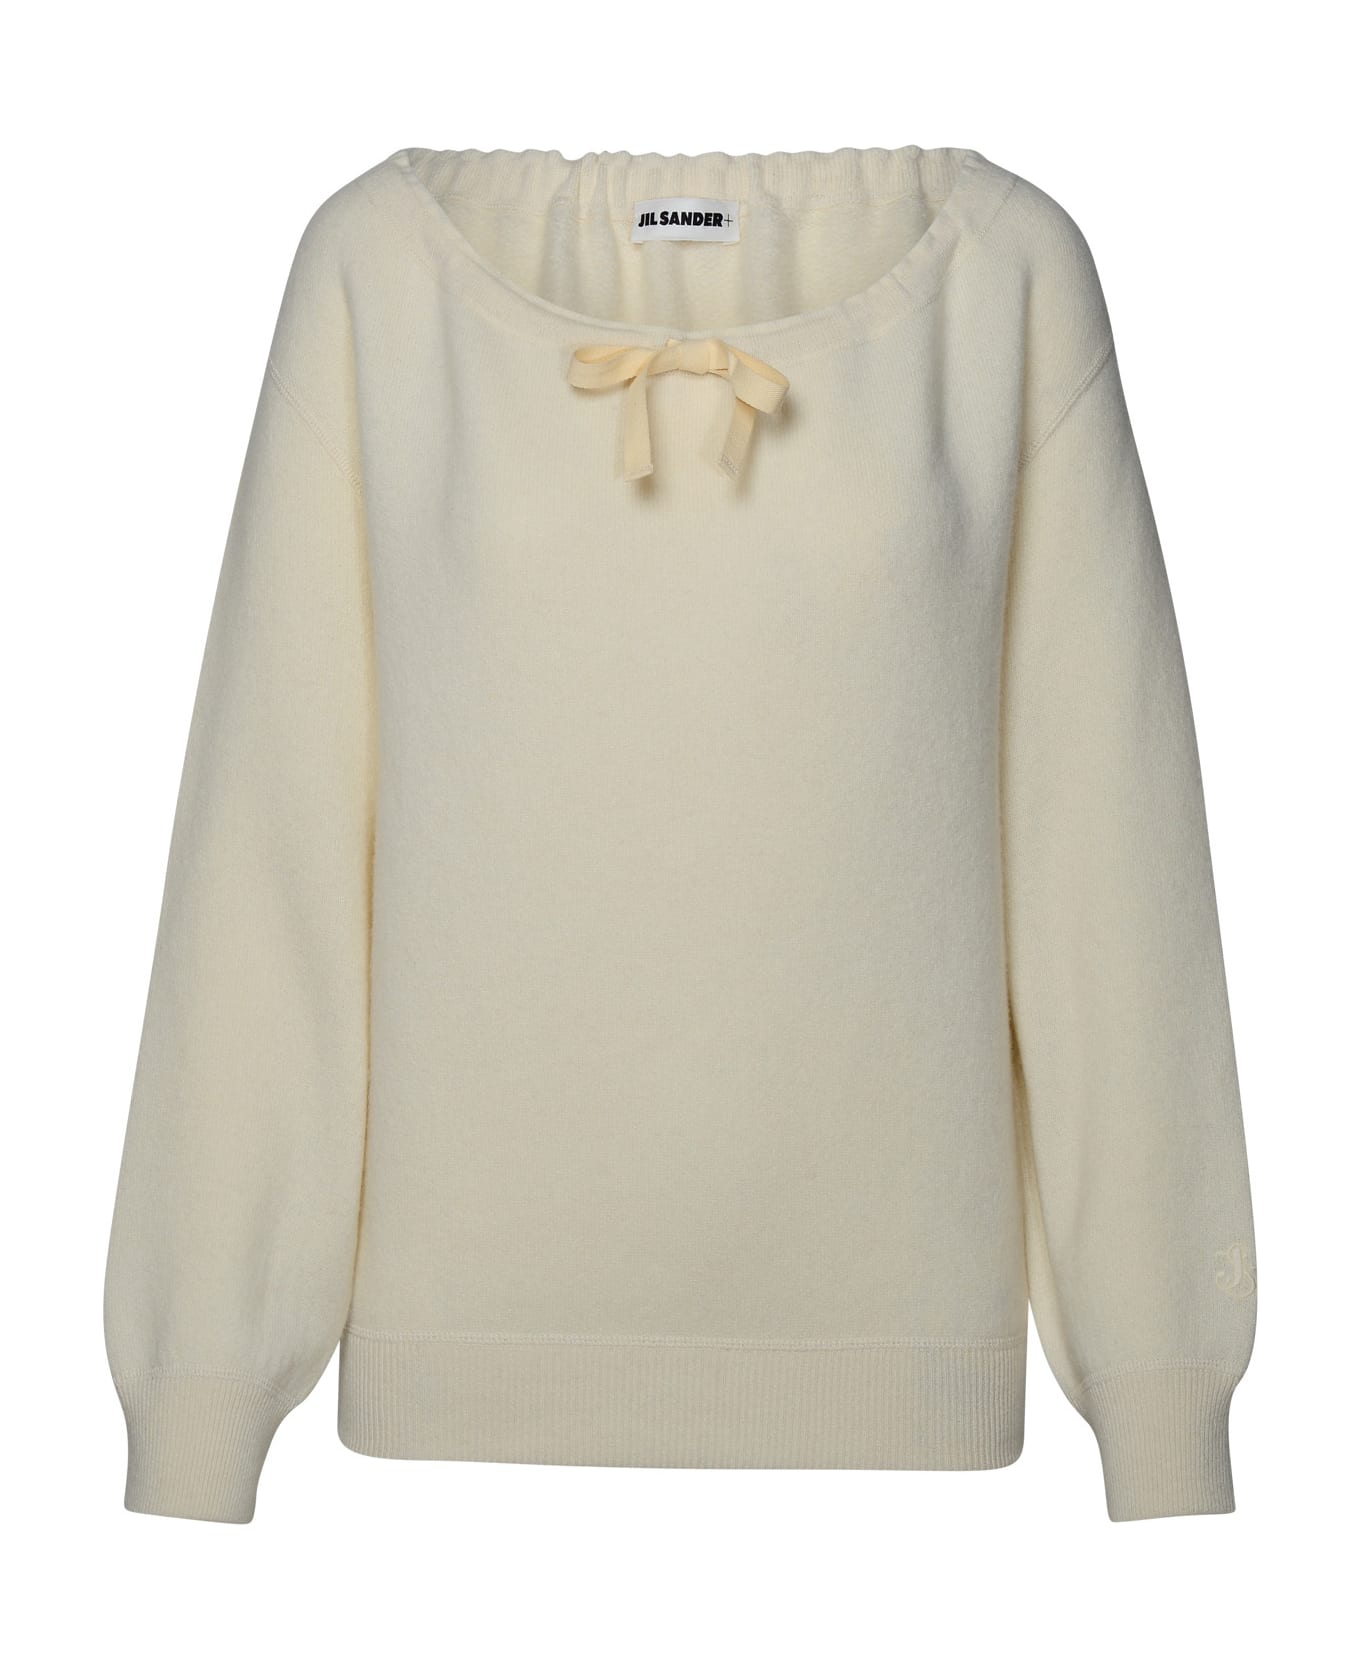 Jil Sander Cream Cashmere Sweater - Cream ニットウェア